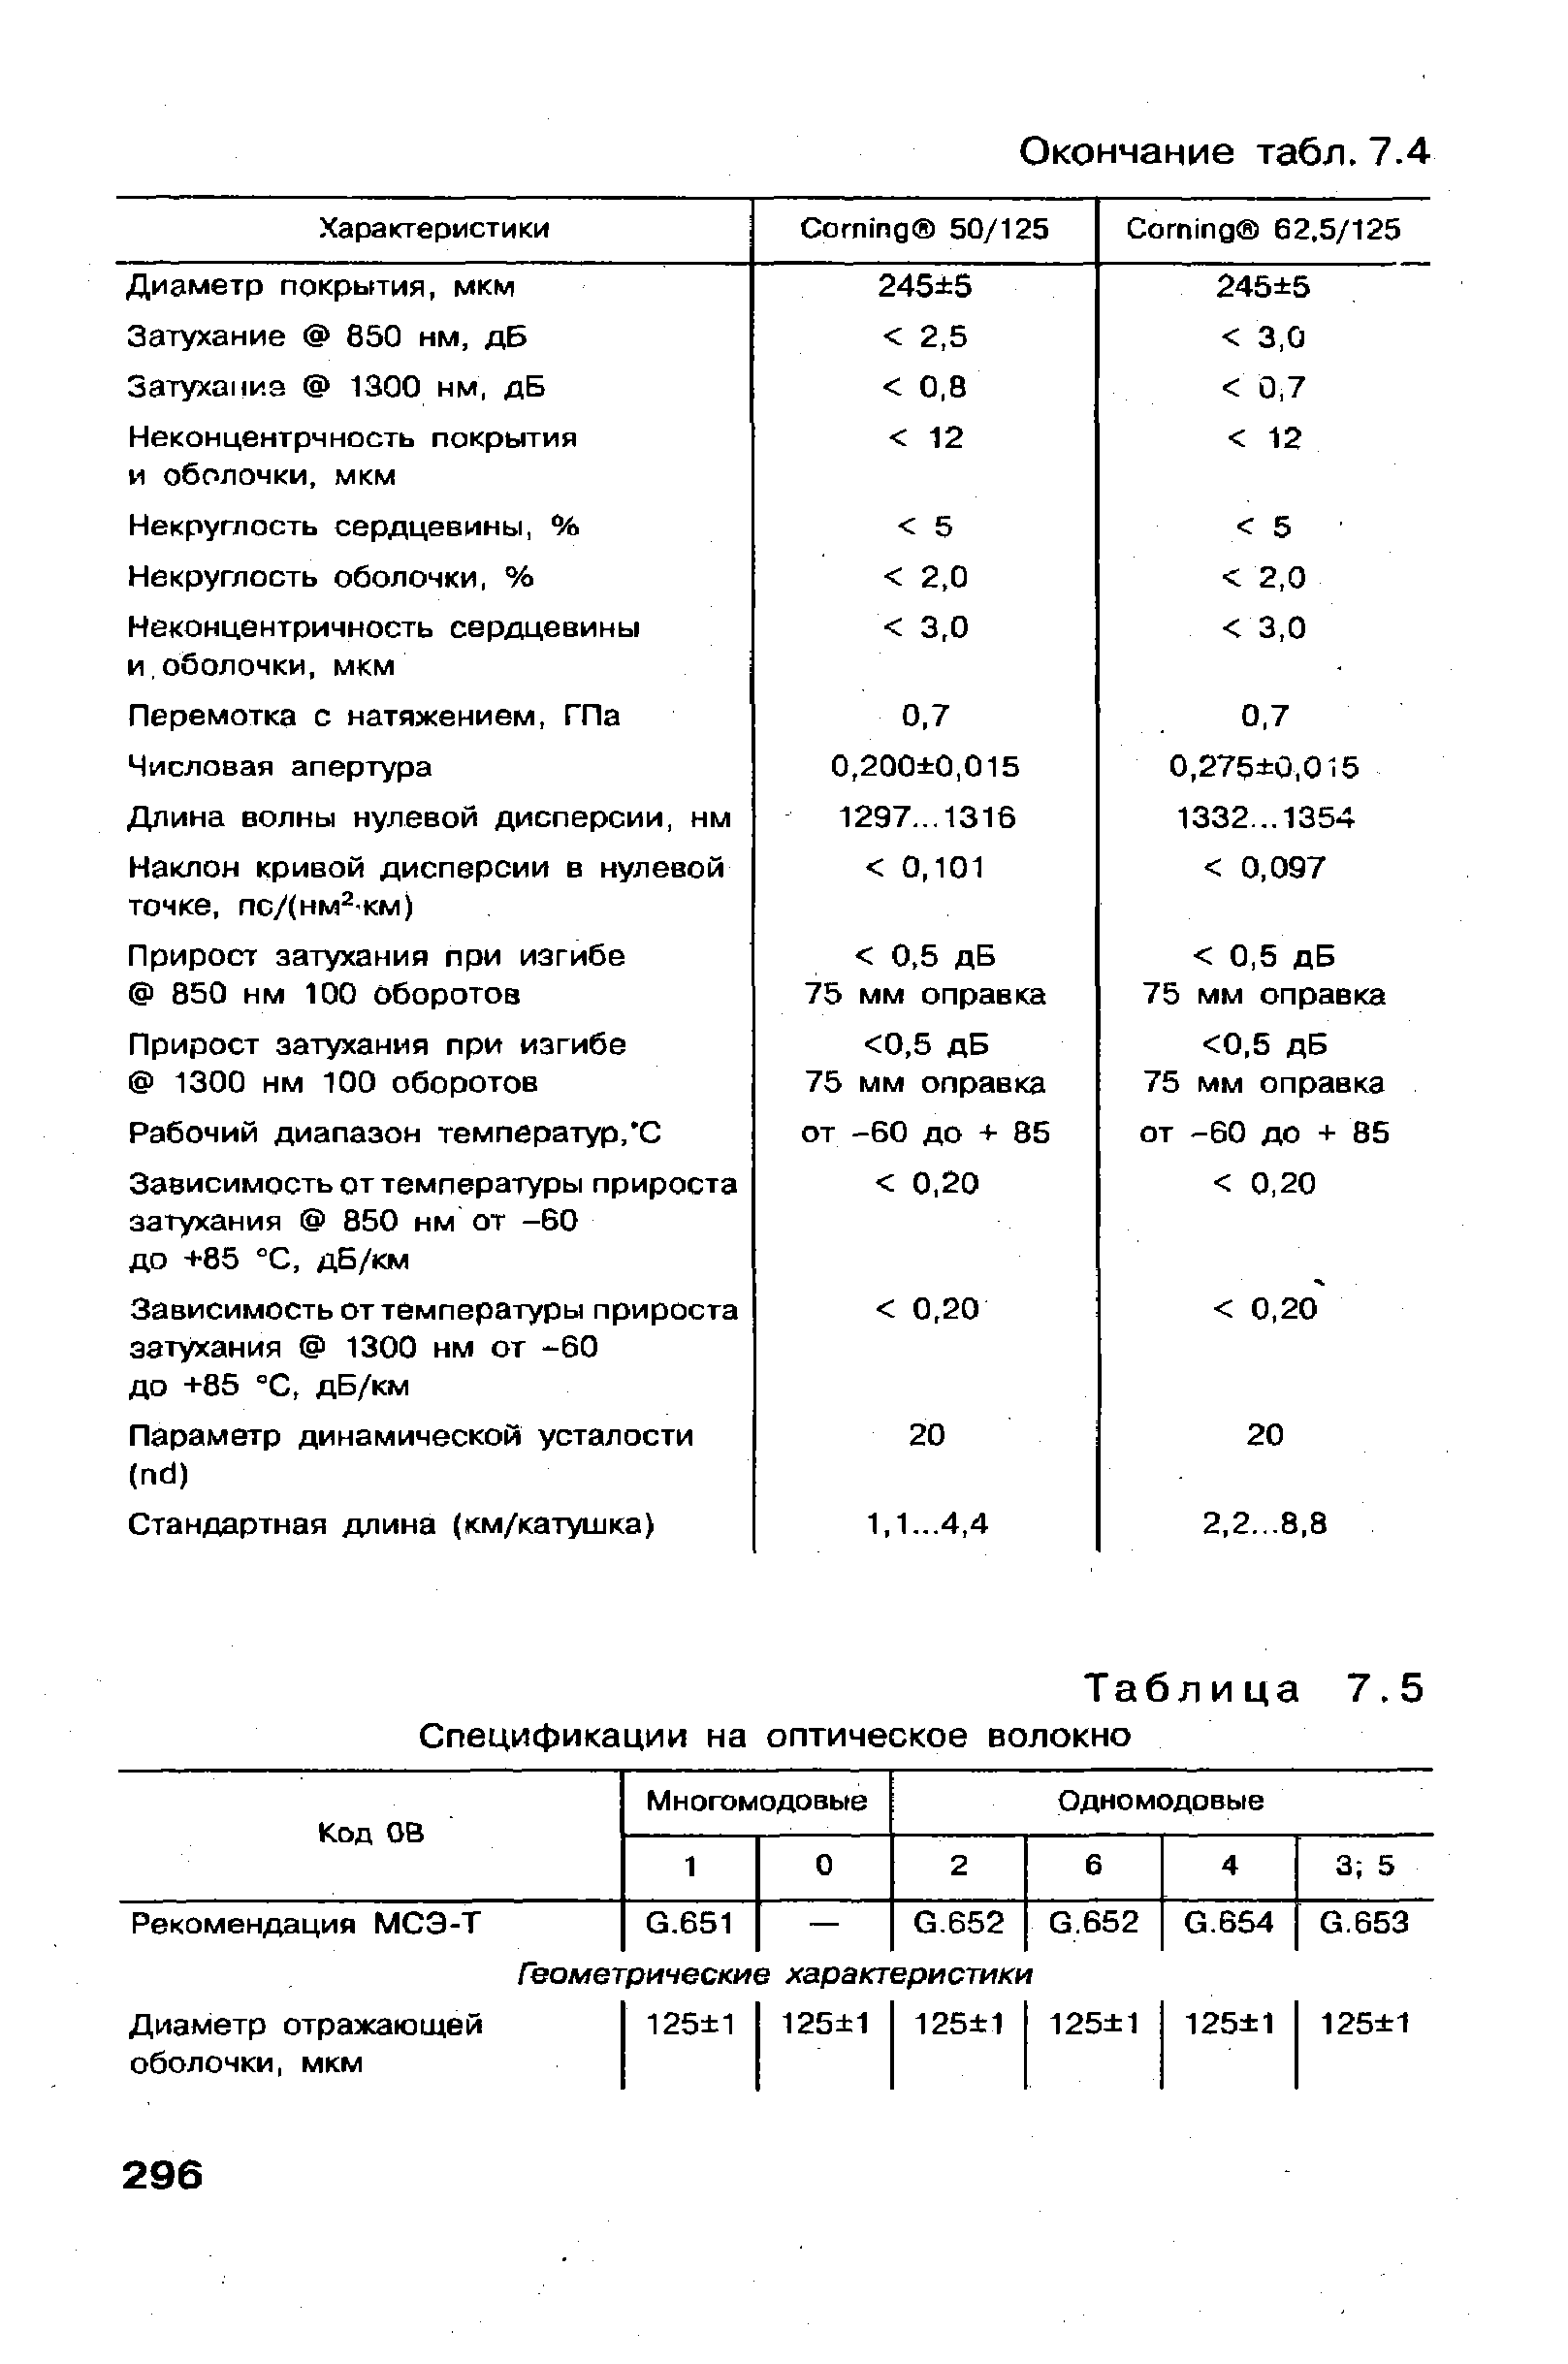 Таблица 7.5 Спецификации на оптическое волокно
